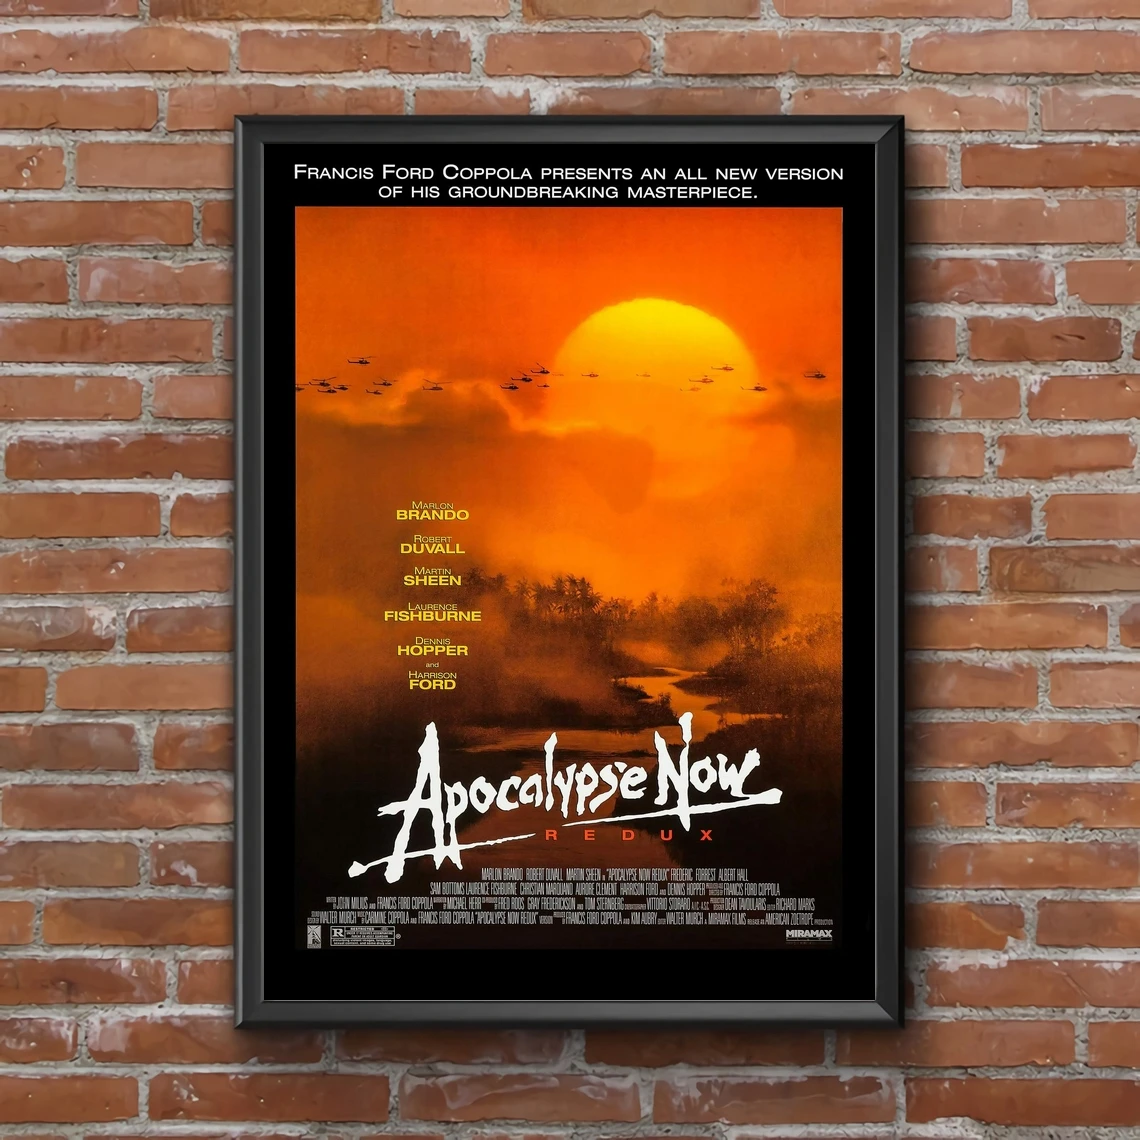 Apocalypse Now Movie Poster Home Decor Wall Decor Wall Art Cnavas Print Print on canvas Decoration in living room 60x80cm No Frame